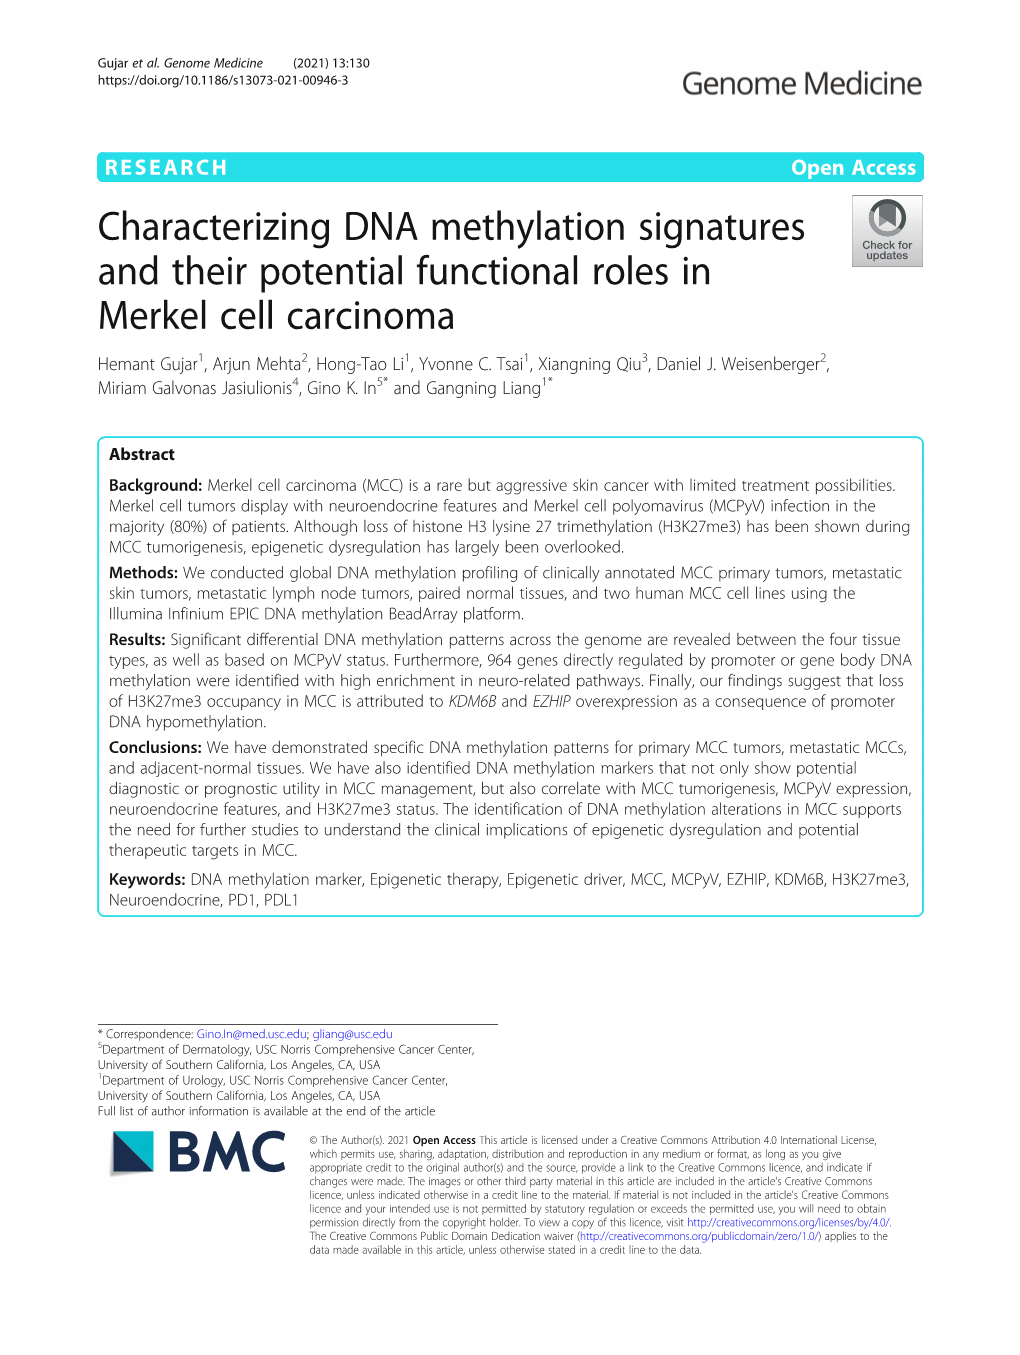 Characterizing DNA Methylation Signatures and Their Potential Functional Roles in Merkel Cell Carcinoma Hemant Gujar1, Arjun Mehta2, Hong-Tao Li1, Yvonne C